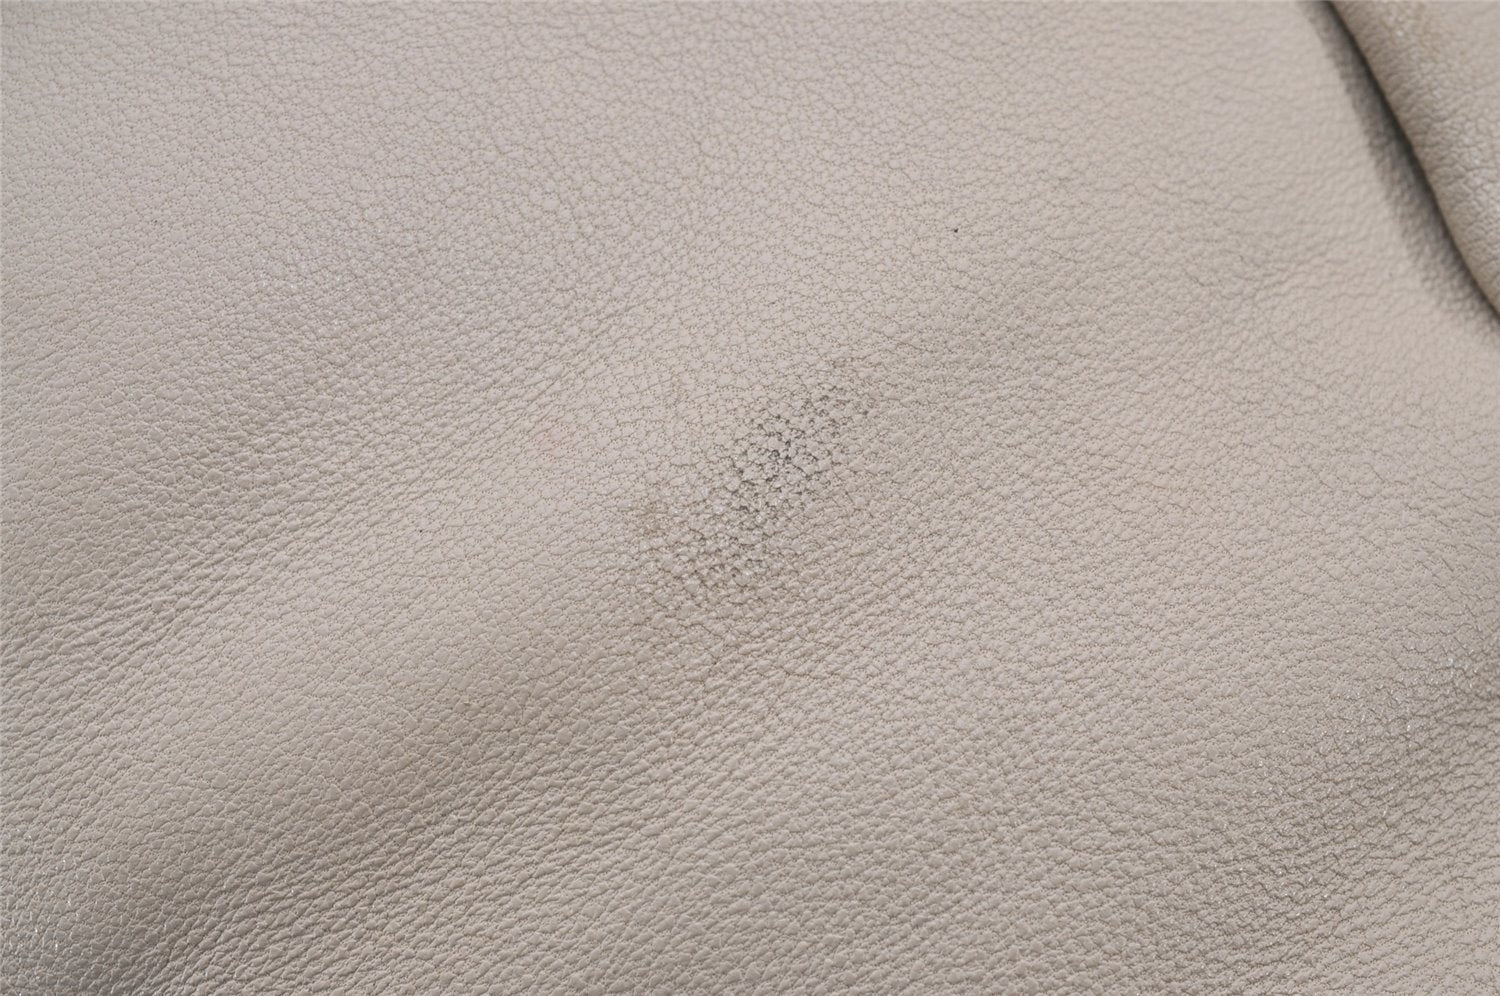 Authentic BOTTEGA VENETA Intrecciato Leather Shoulder Bag Purse White 1003J